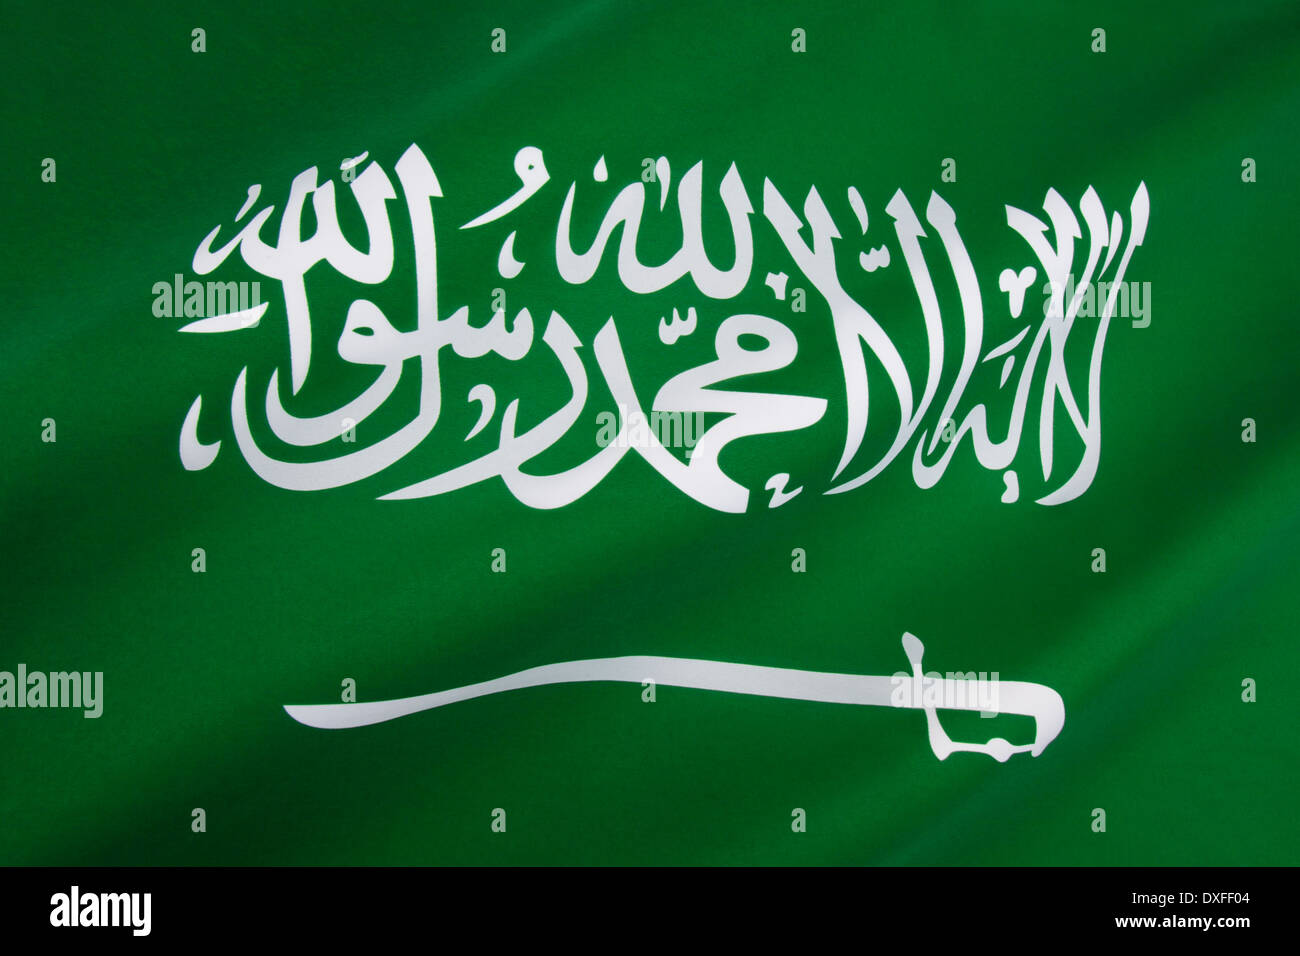 The national flag of Saudi Arabia Stock Photo